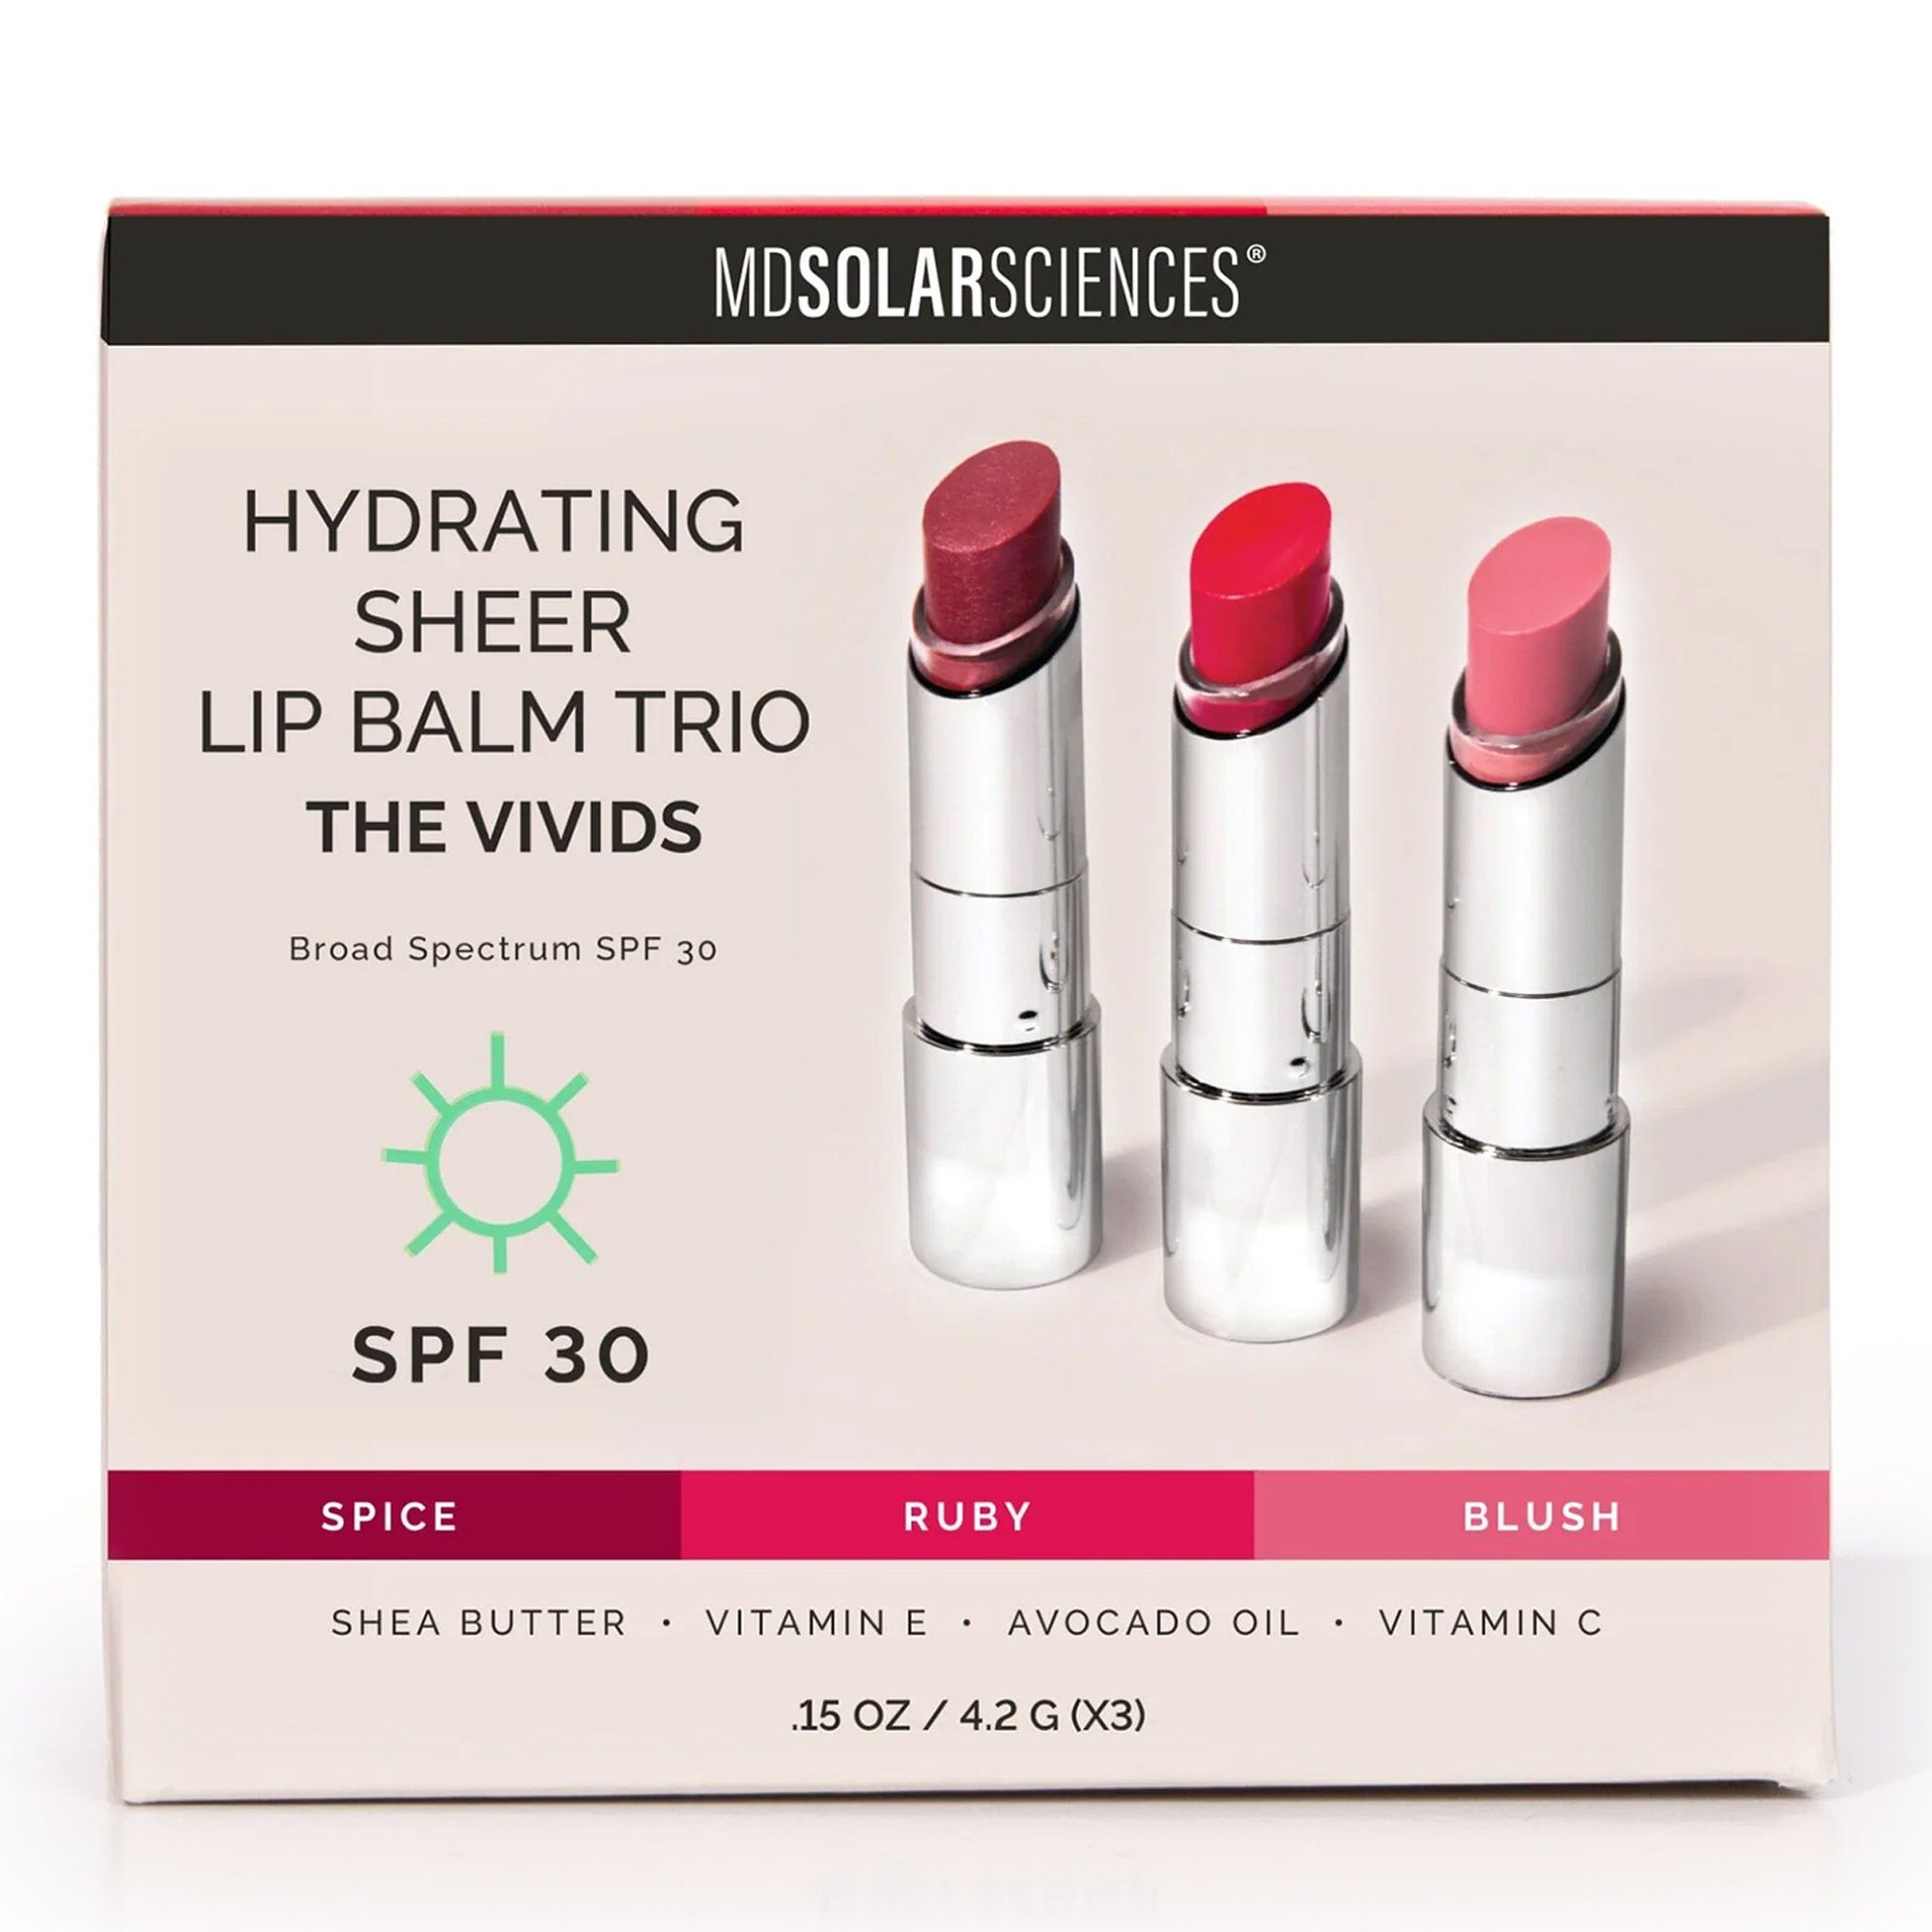 MDSolarSciences Hydrating Sheer Lip Balm Trio (The Vivids), Spice, Ruby, Blush - SPF 30